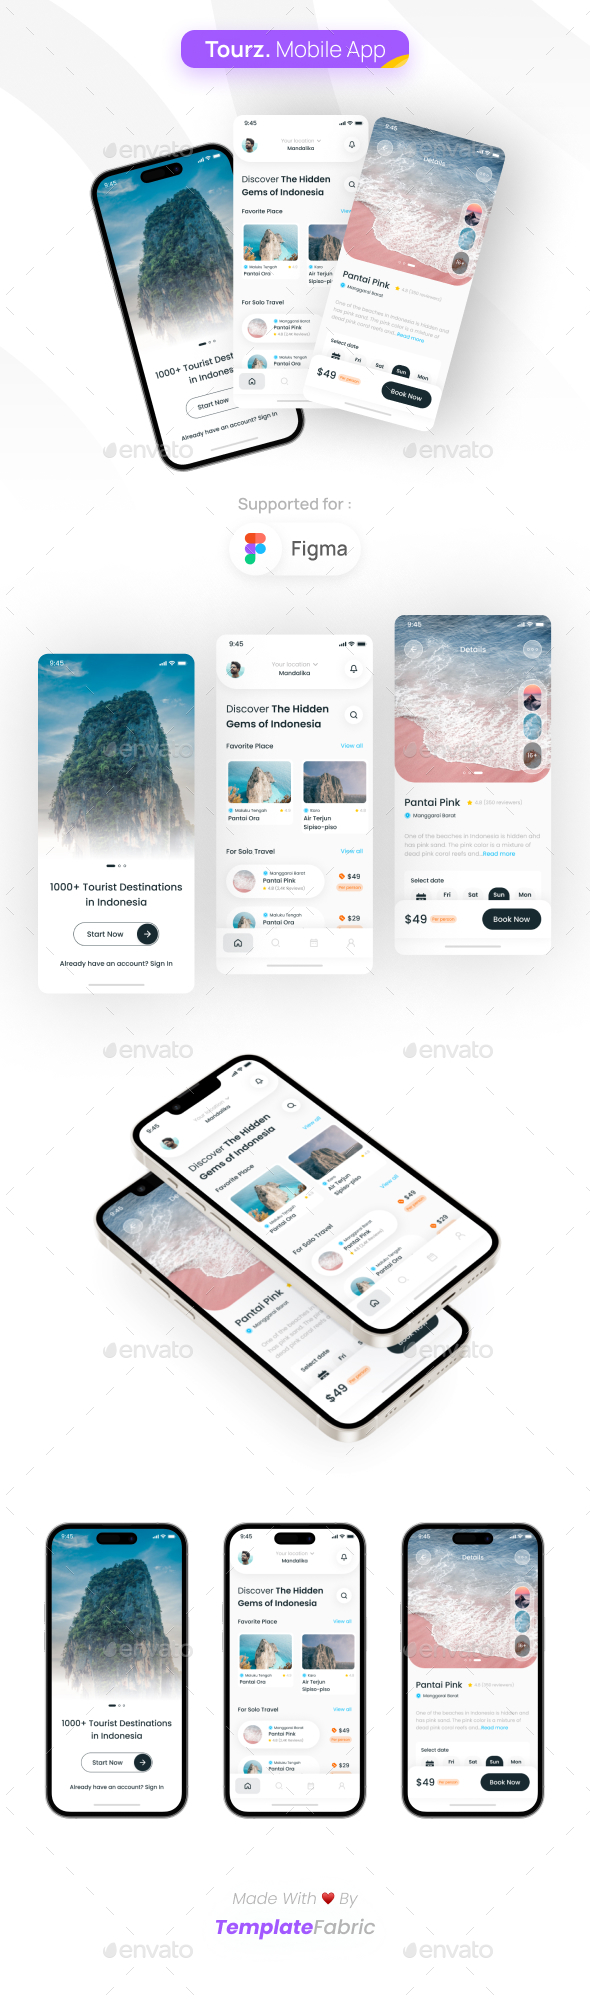 [DOWNLOAD]Tourz - Travel Agency Mobile App UI Kit